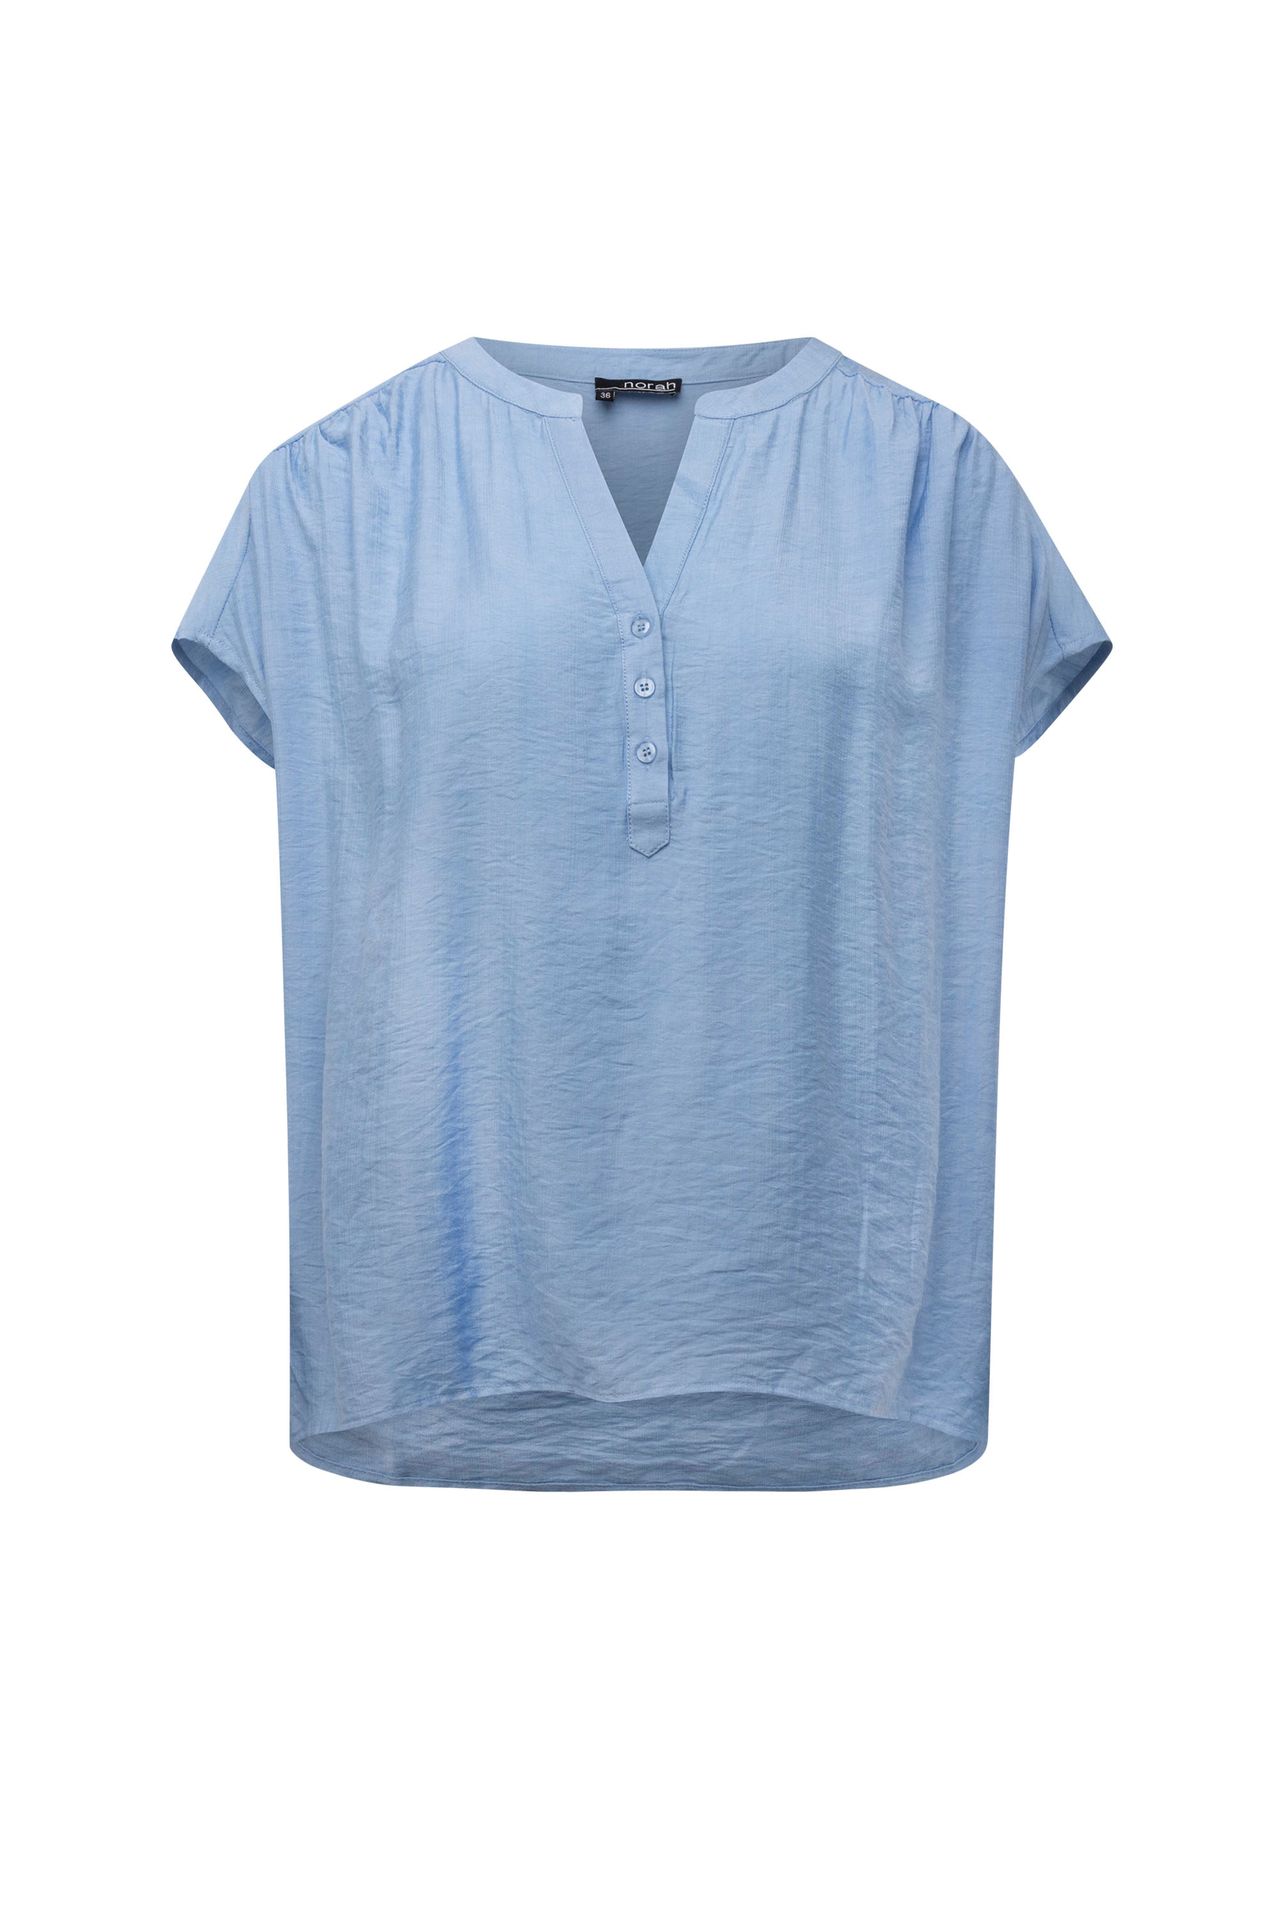 Norah Blauwe blouse light blue 214671-401